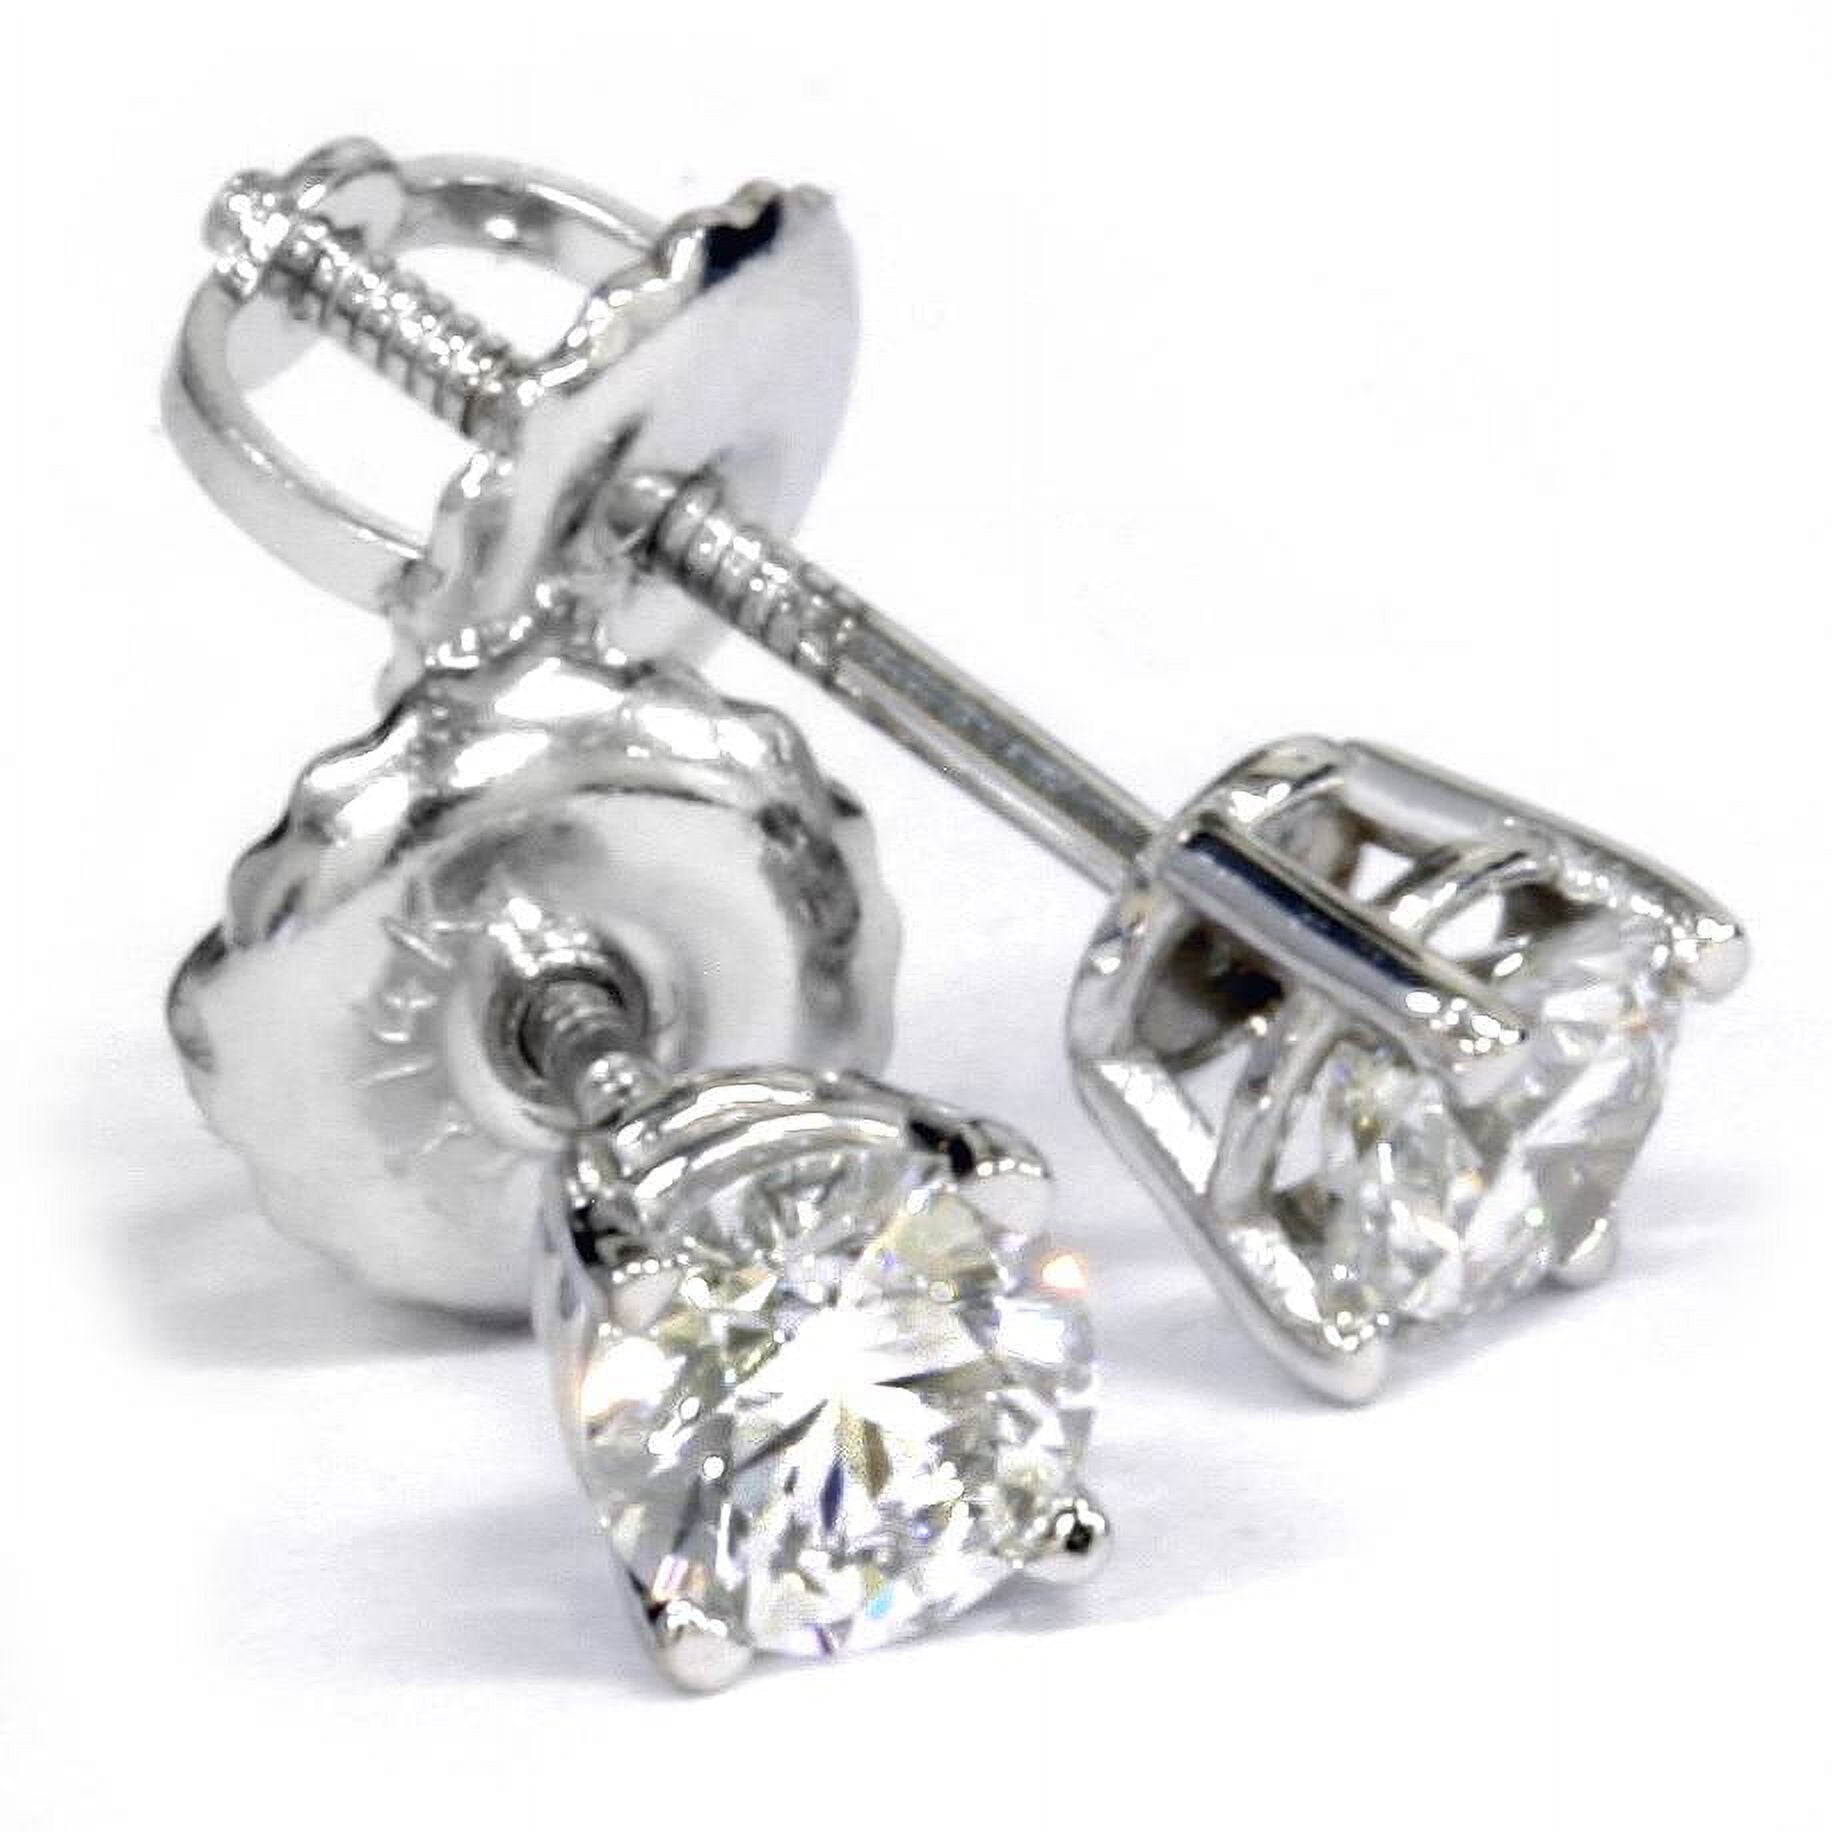 14kt White Gold Screw Back Earrings with CZs 002-210-2001186, Bluestone  Jewelry